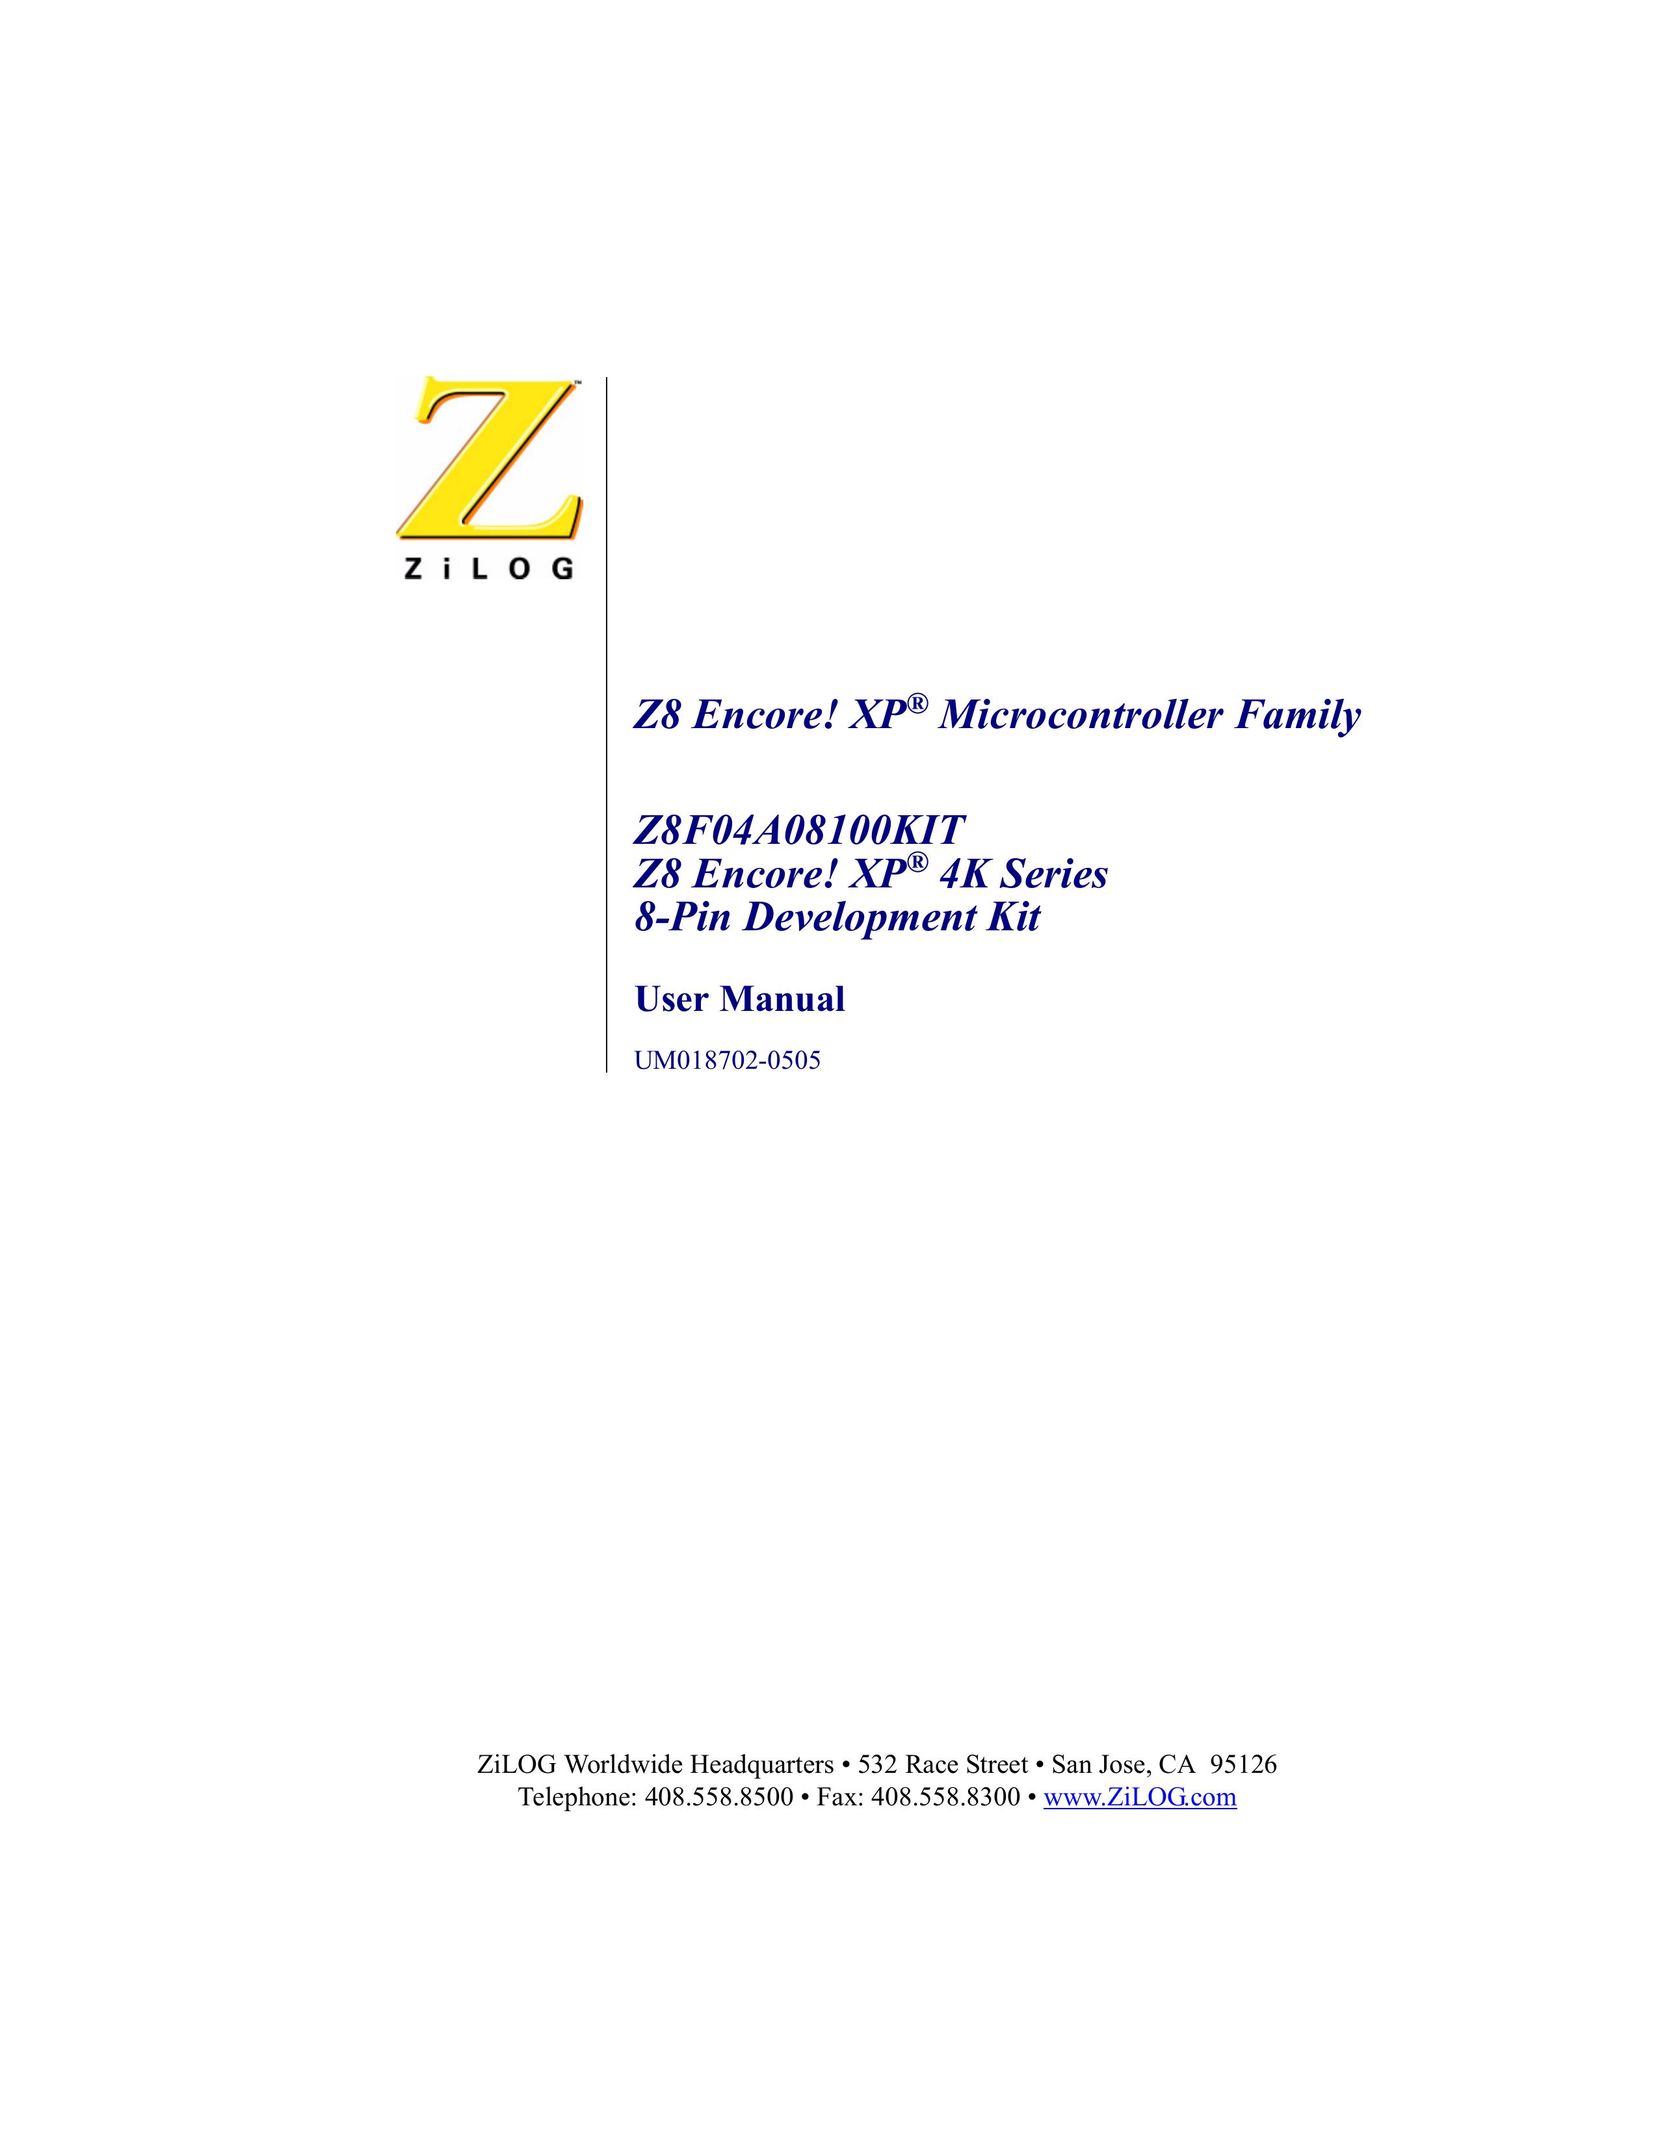 ADC Z8F04A08100KIT Switch User Manual